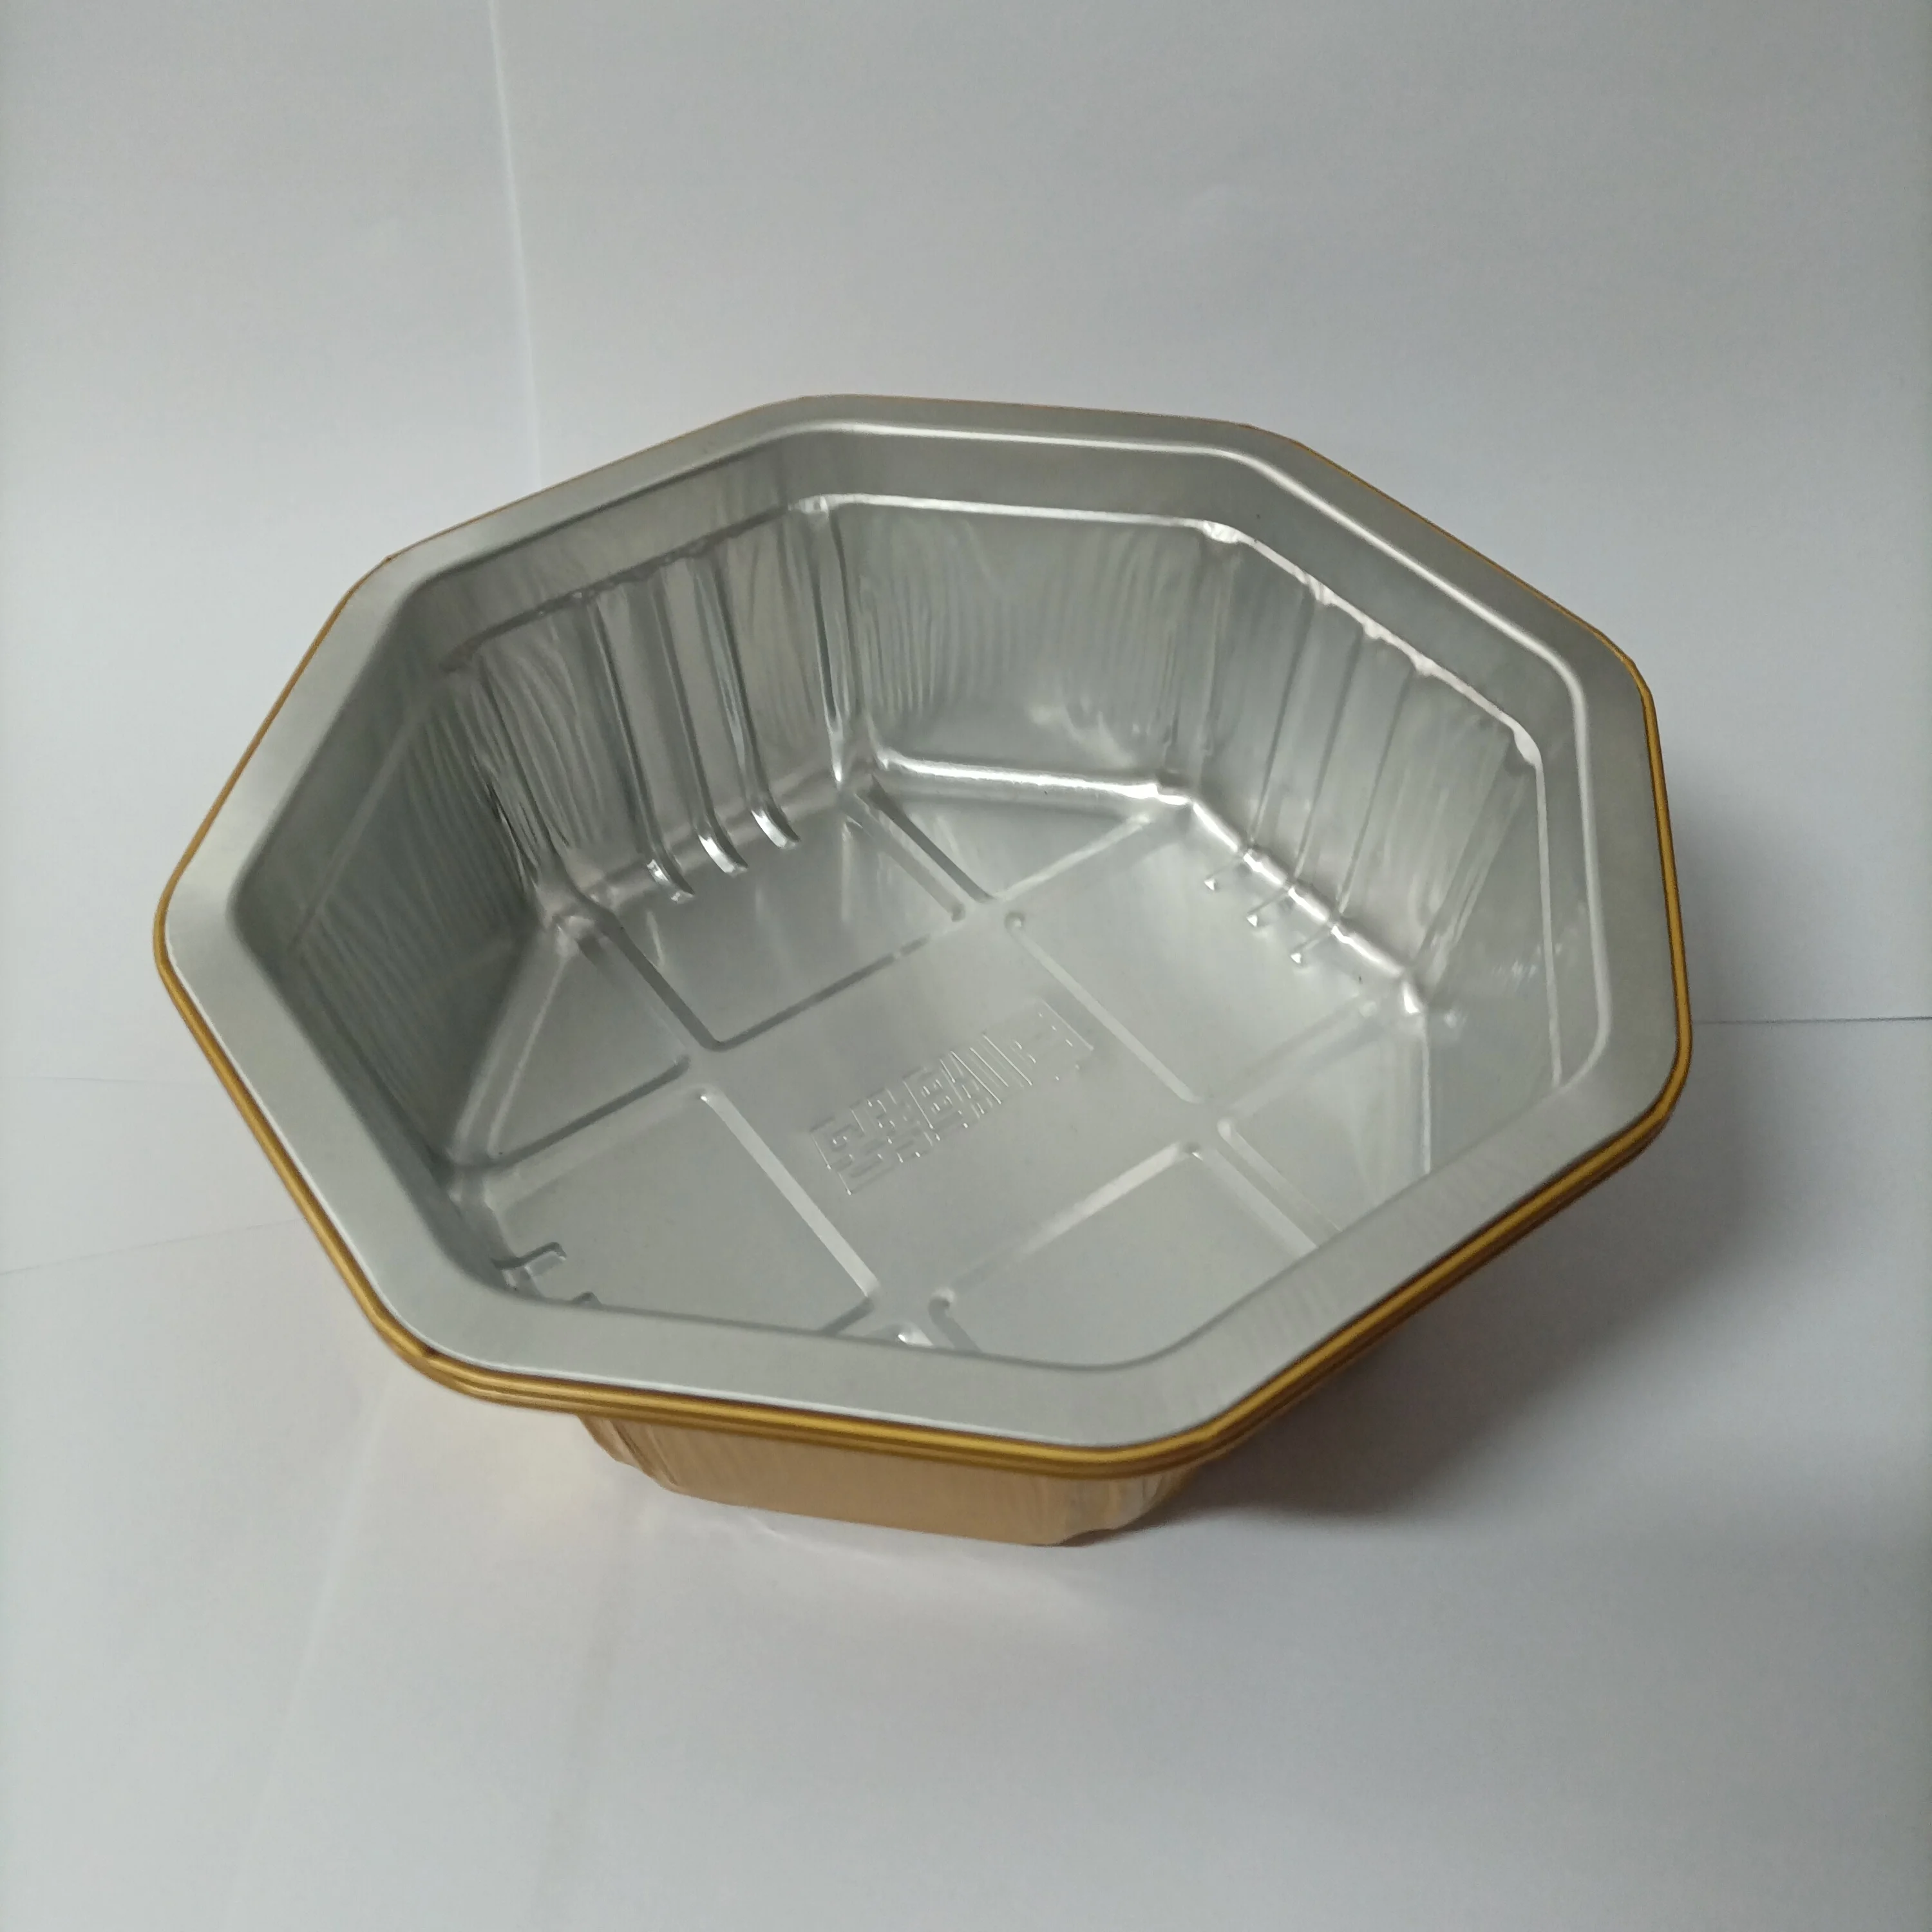 disposable paella pans durable silver golden aluminum container